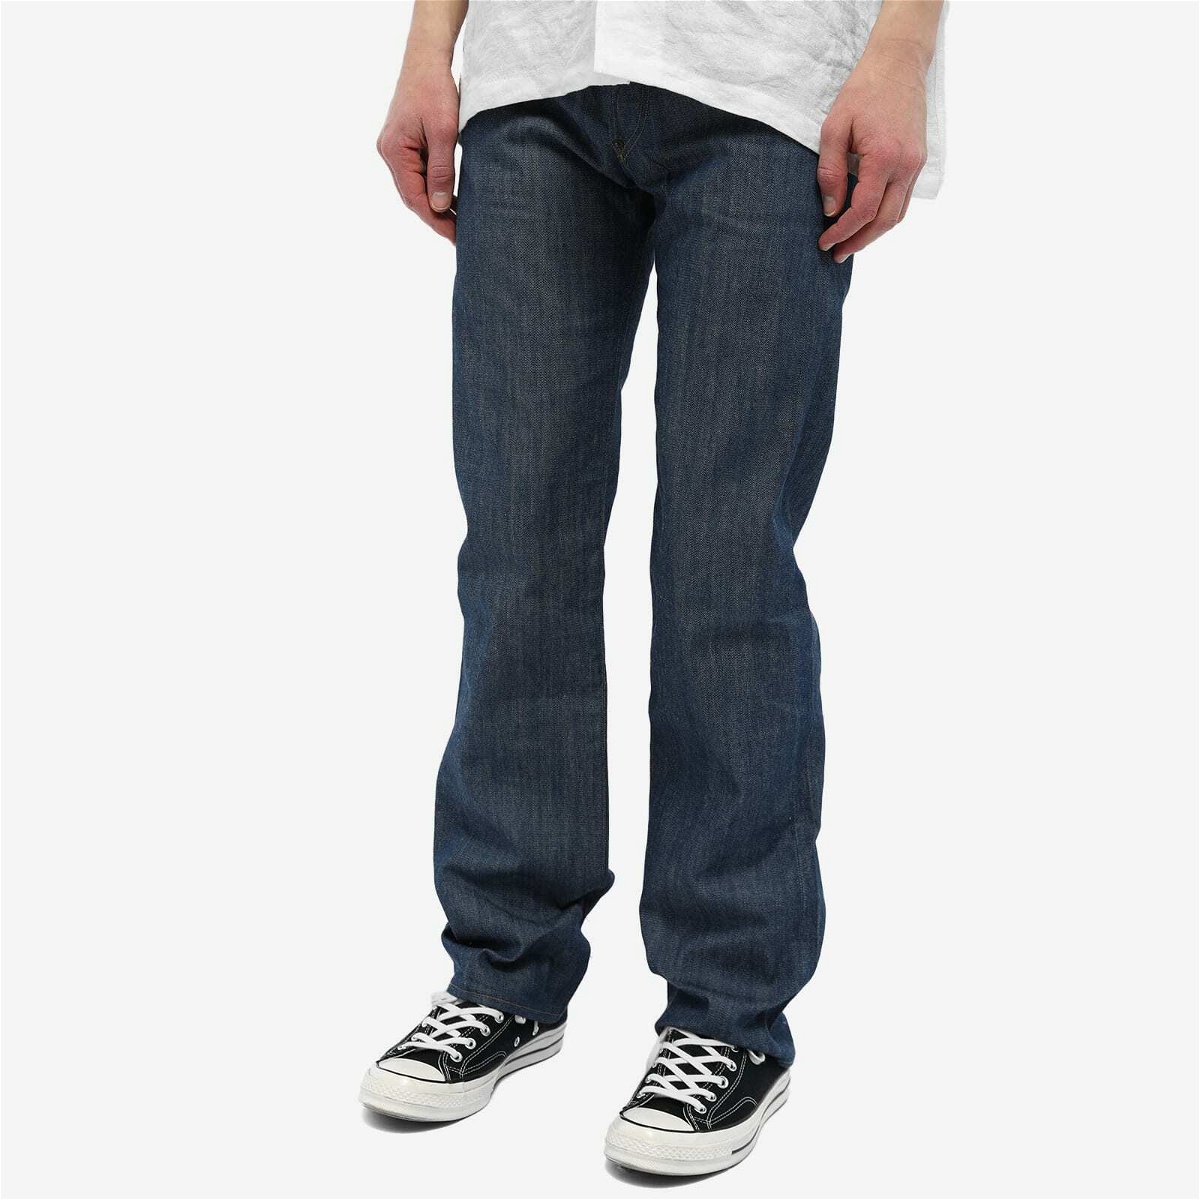 Levi's 501 White Oak Cone Denim Jean Shorts